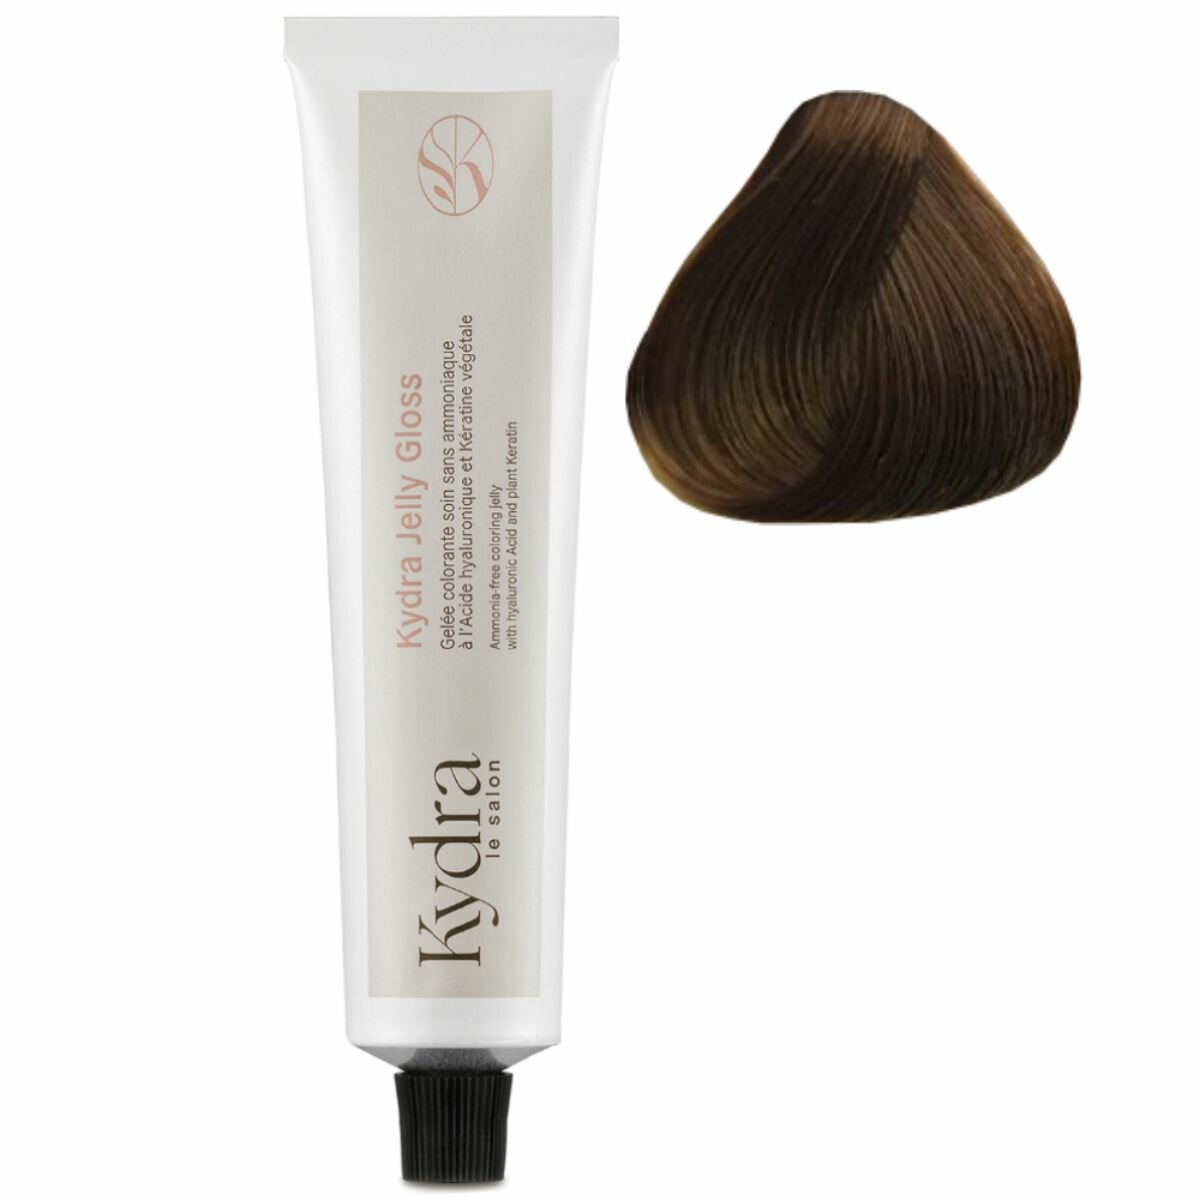 Kydra Jelly Gloss 7-3 Тонирующая гель краска для волос 60 мл